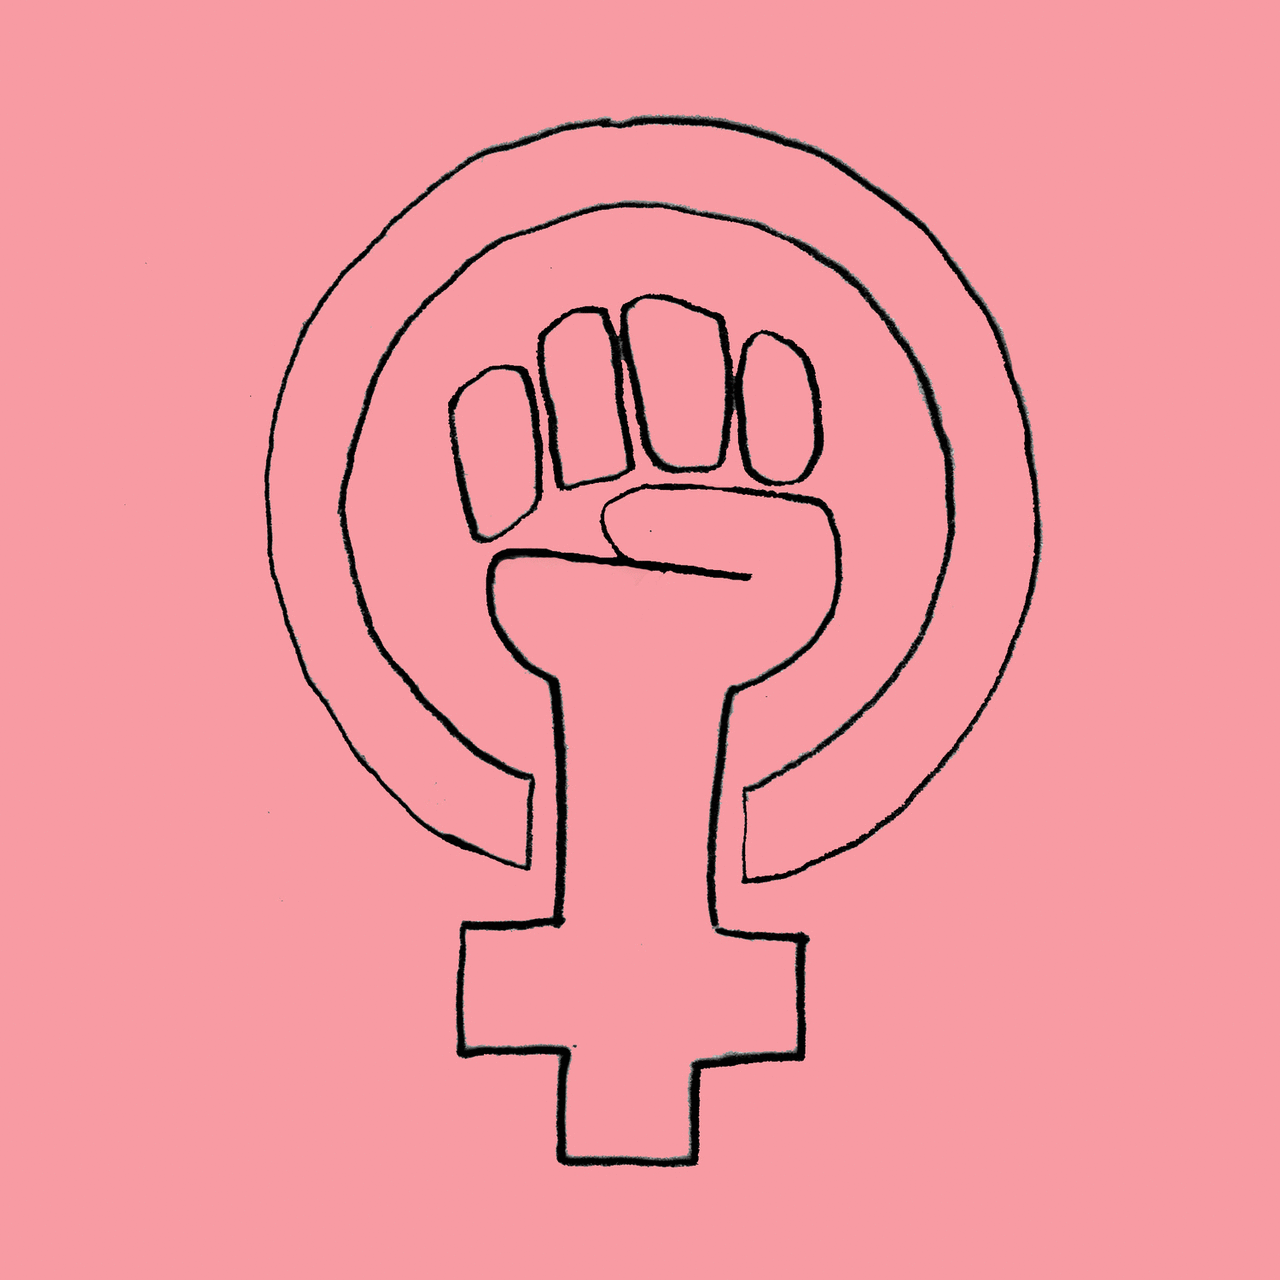 Феминизм. Значок феминизма. Флаг феминисток. Герб феминисток. Спрей феминизм бравл